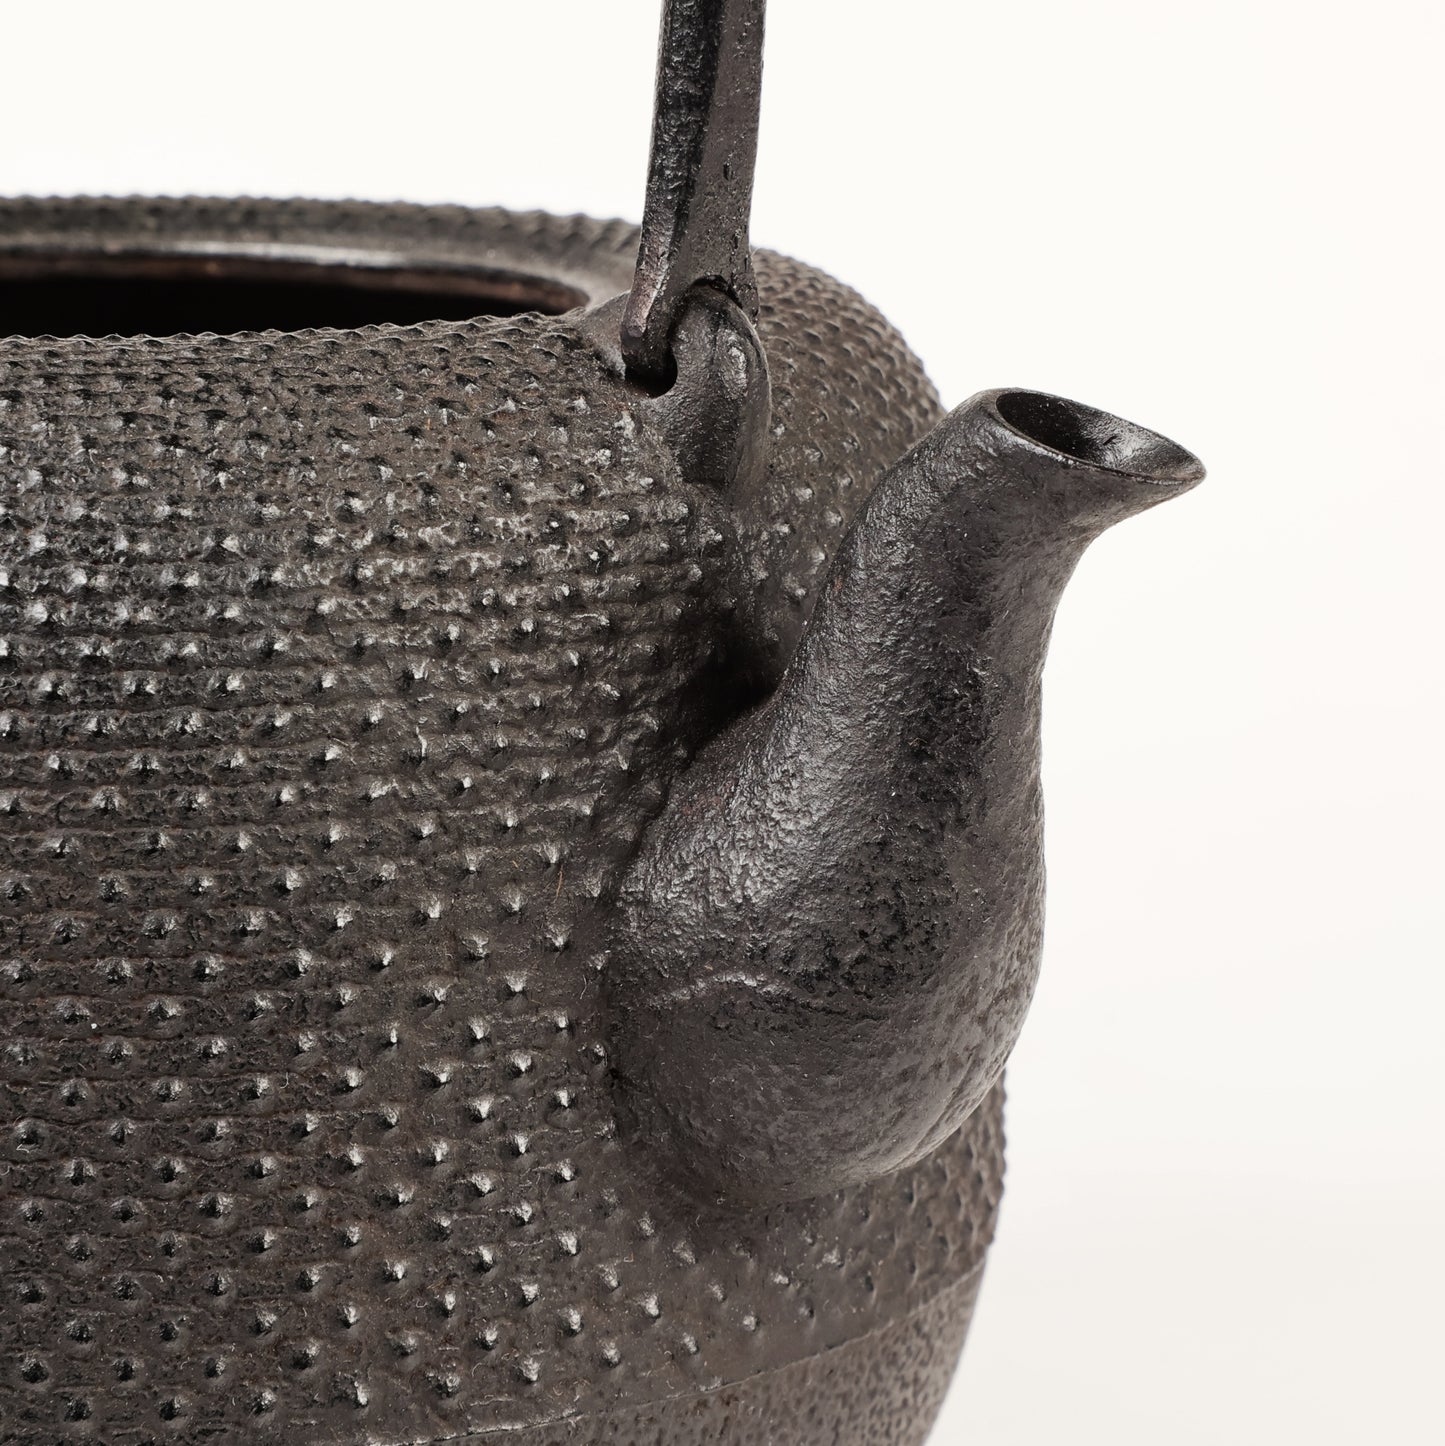 Tetsubin, Tetsubin kettle, Cast iron tea kettle, Japanese iron kettle, Cast iron kettle, Tetsubin iron teapot, Japanese tea kettle, Natsume, Free Shipping